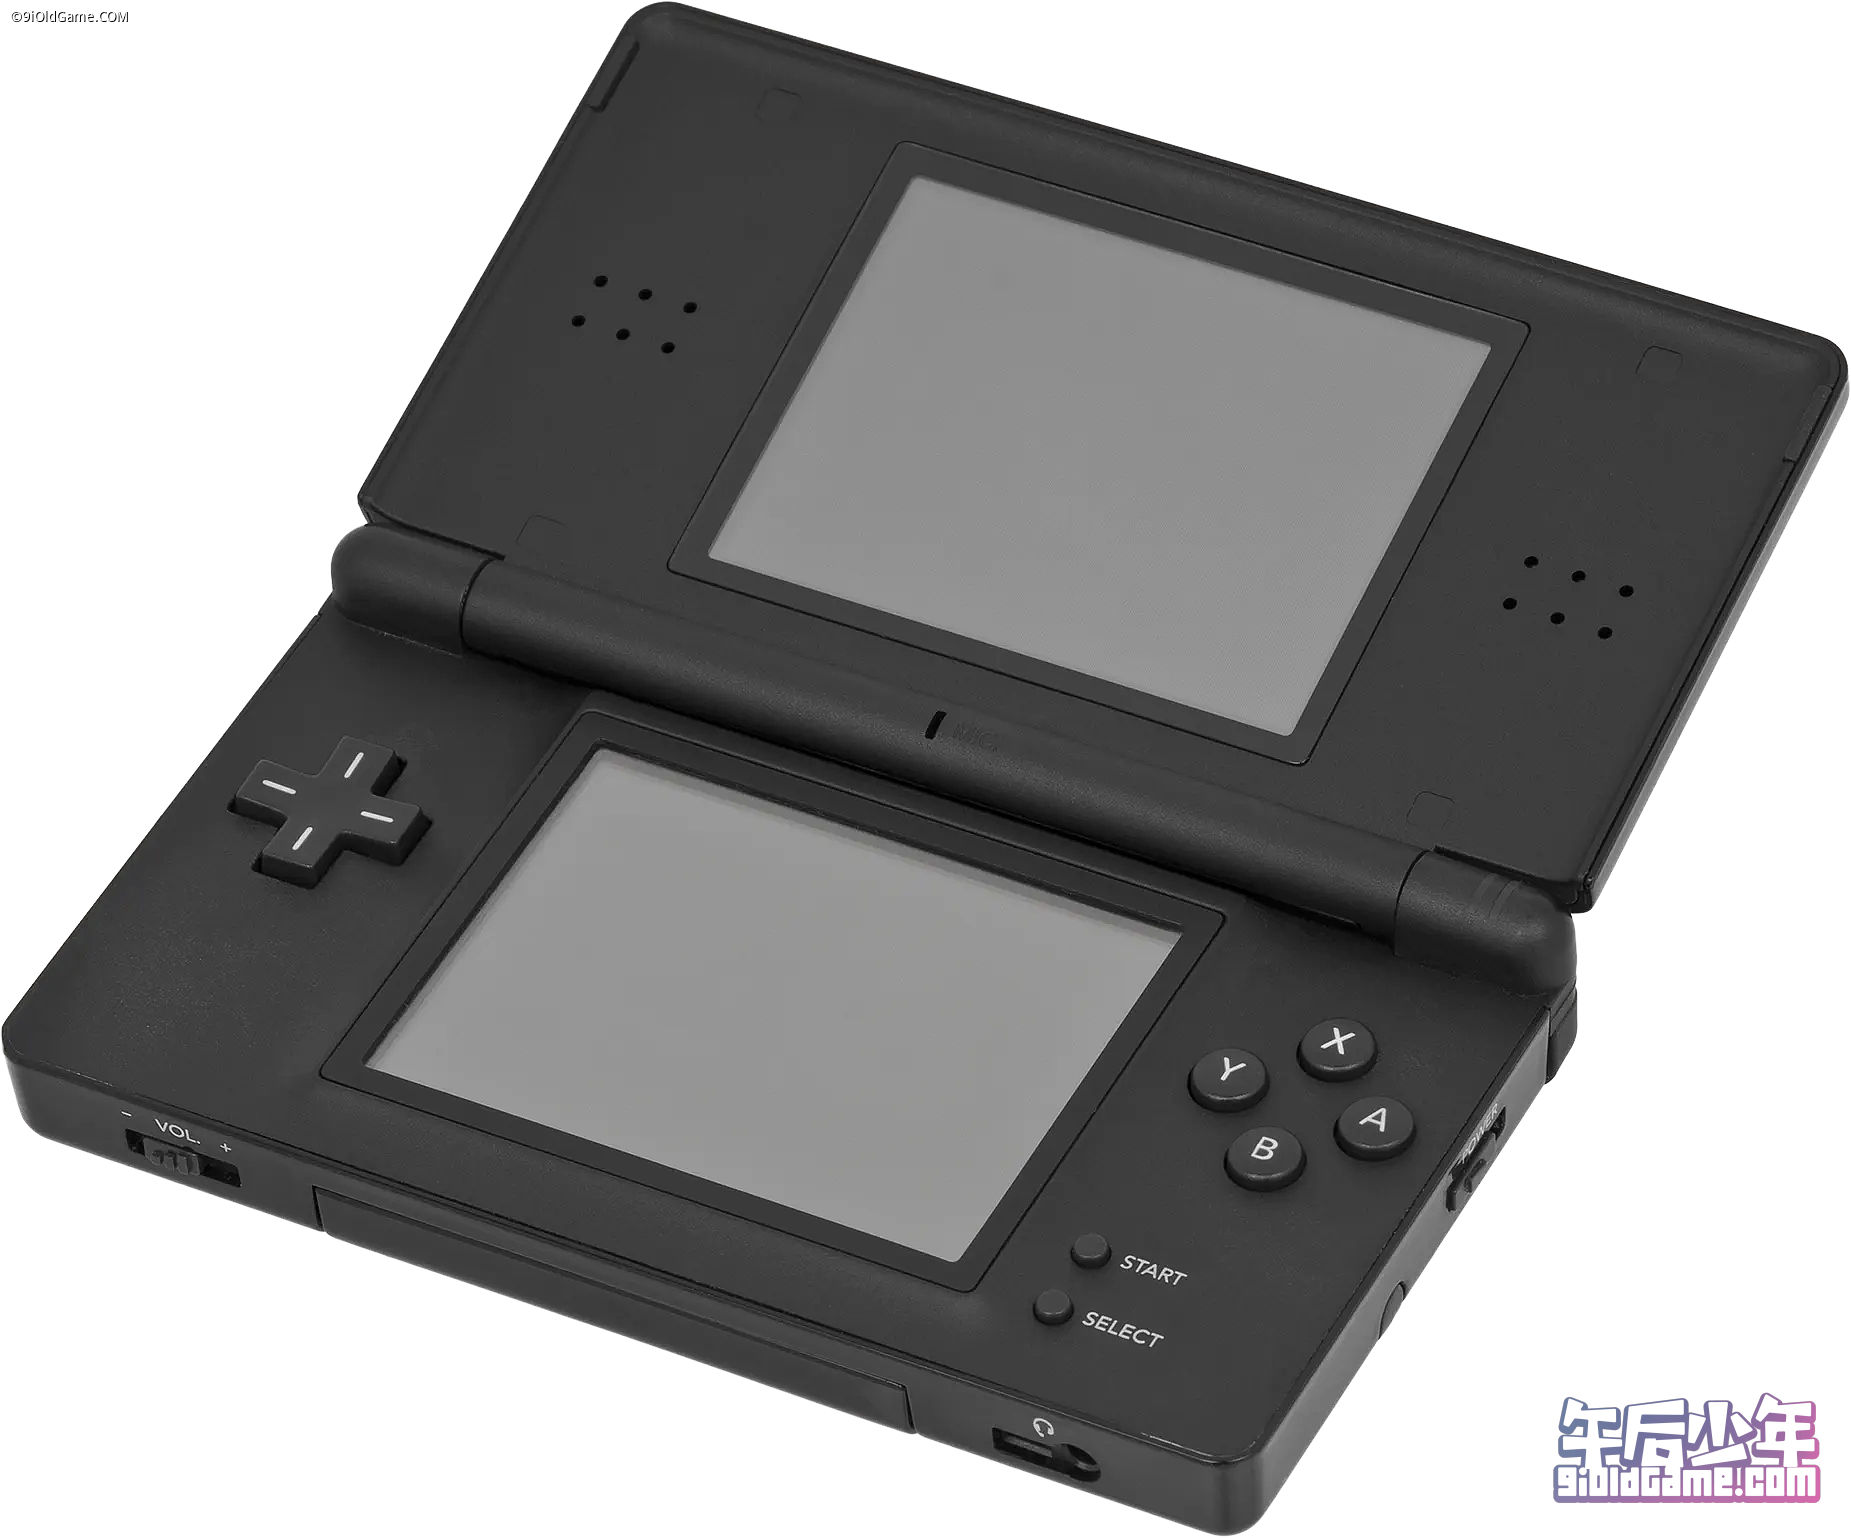 Gamebook D S - Koukaku No Regios - Nintendo DS (NDS) rom download